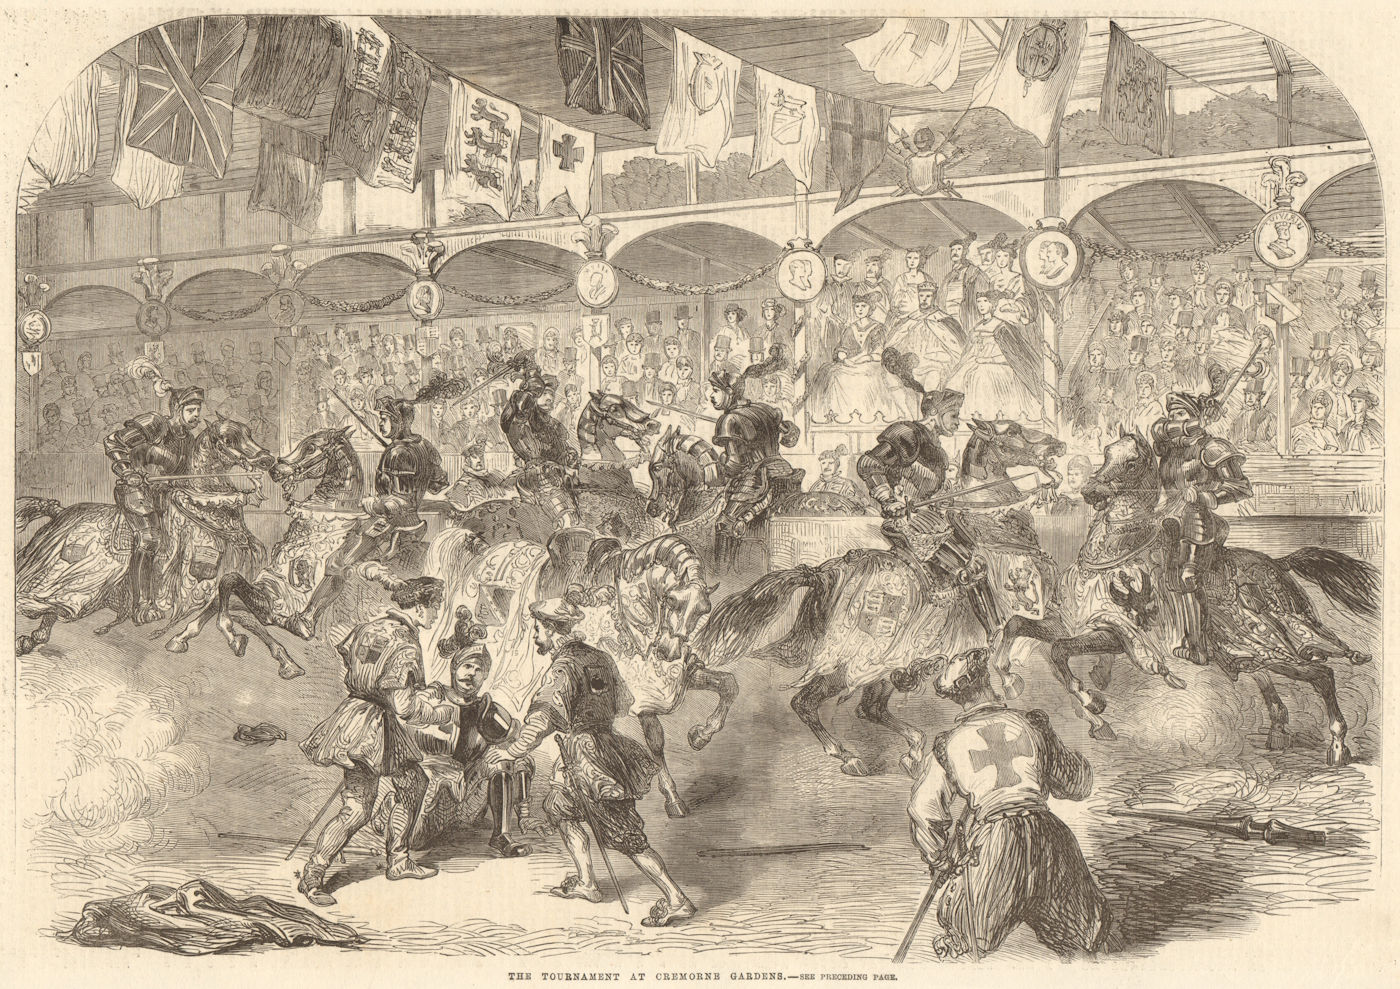 The tournament at Cremorne Gardens. London. Militaria 1863 old antique print